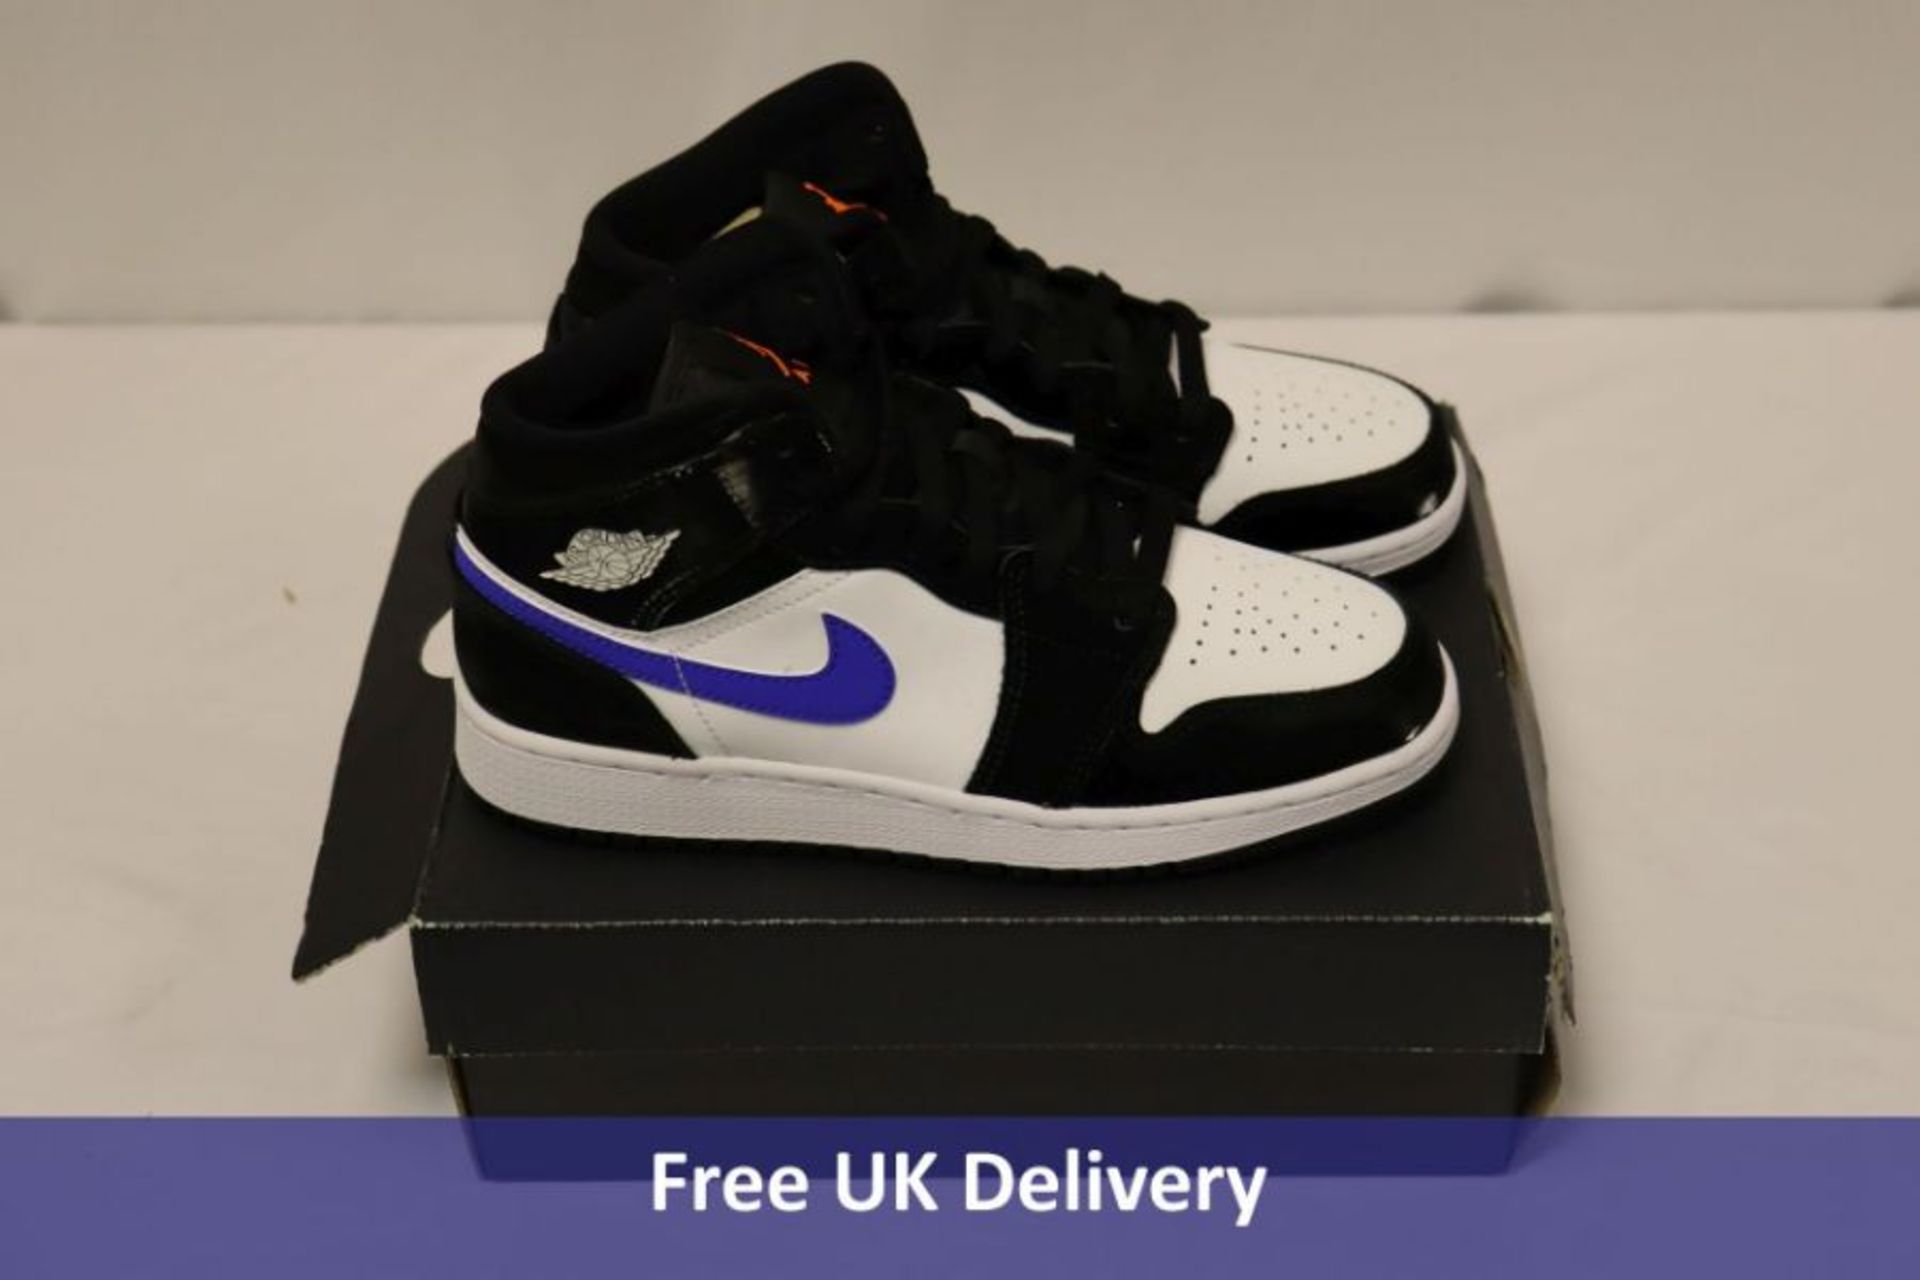 Nike Kid's Air Jordan 1 Mid (GS) Trainers, Black/Racer Blue/White, UK 4.5, 554725 084. Box damaged